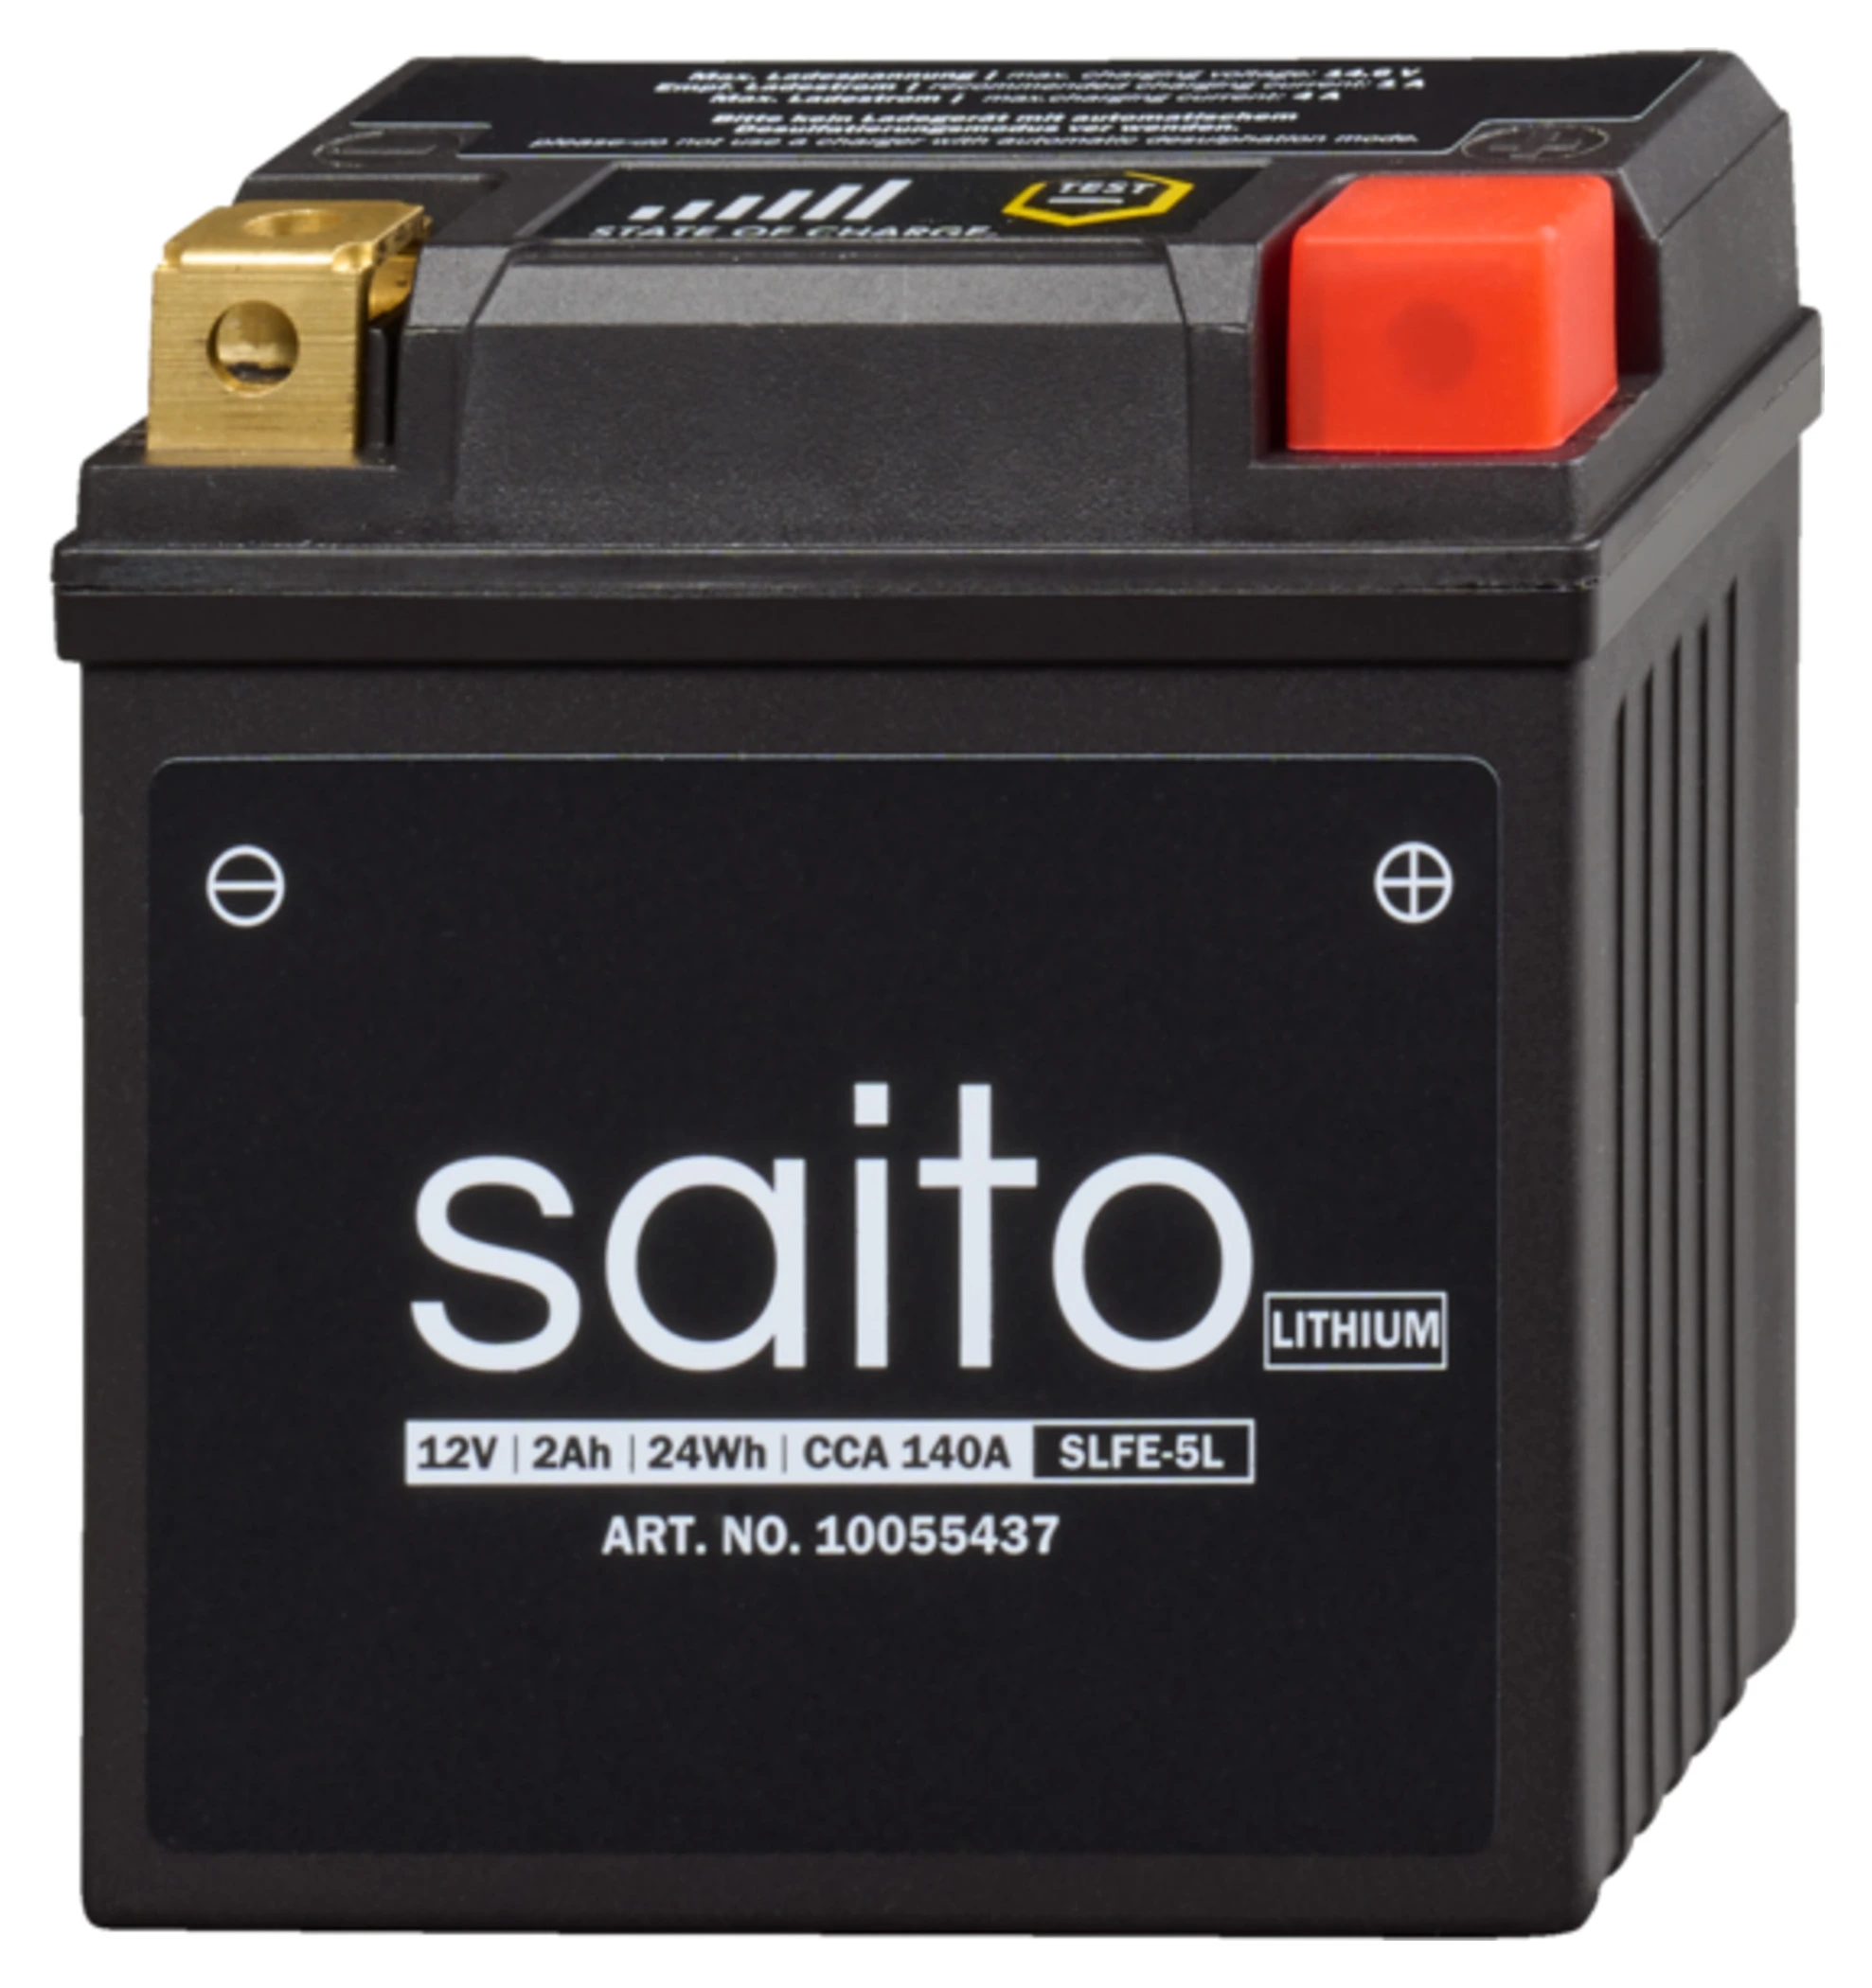 Saito saito Batteries au lithium-ion avantageux